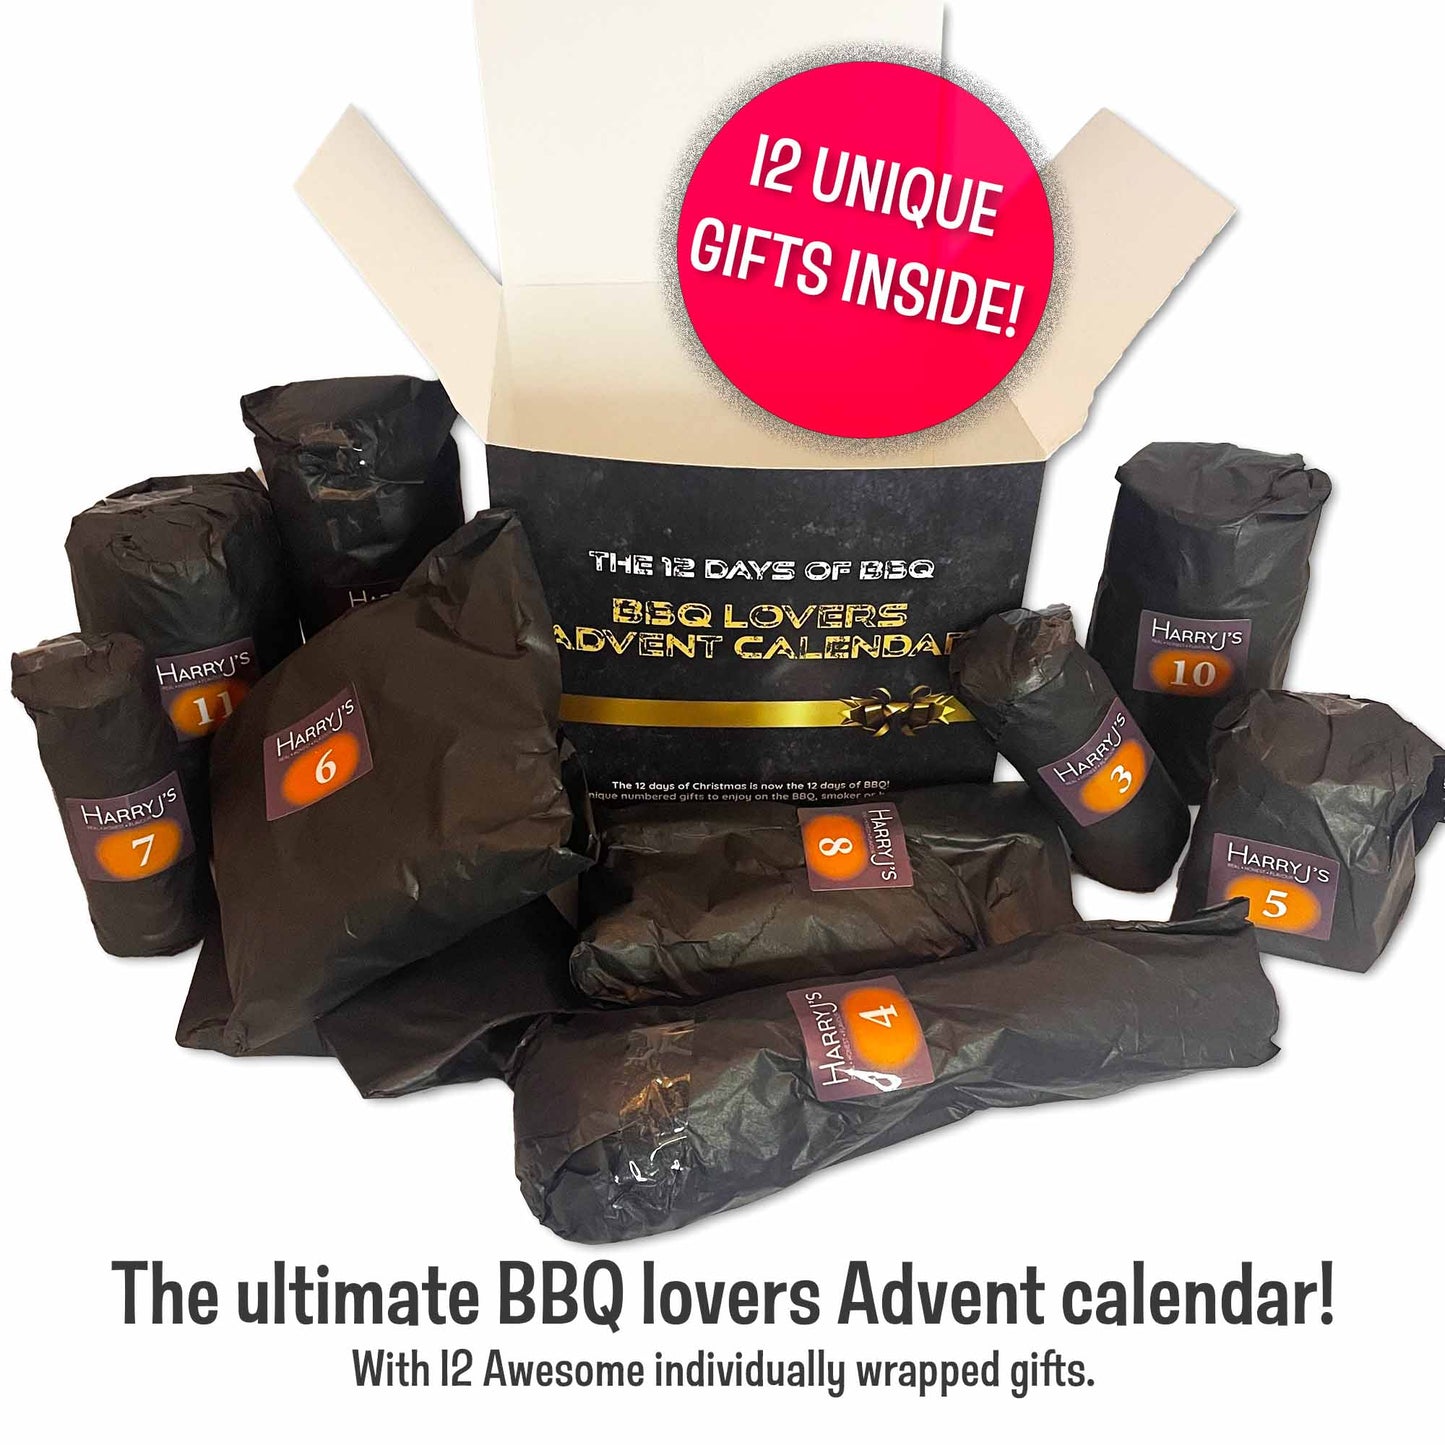 The 12 Days Of BBQ  Advent Calendar Christmas Gift Box